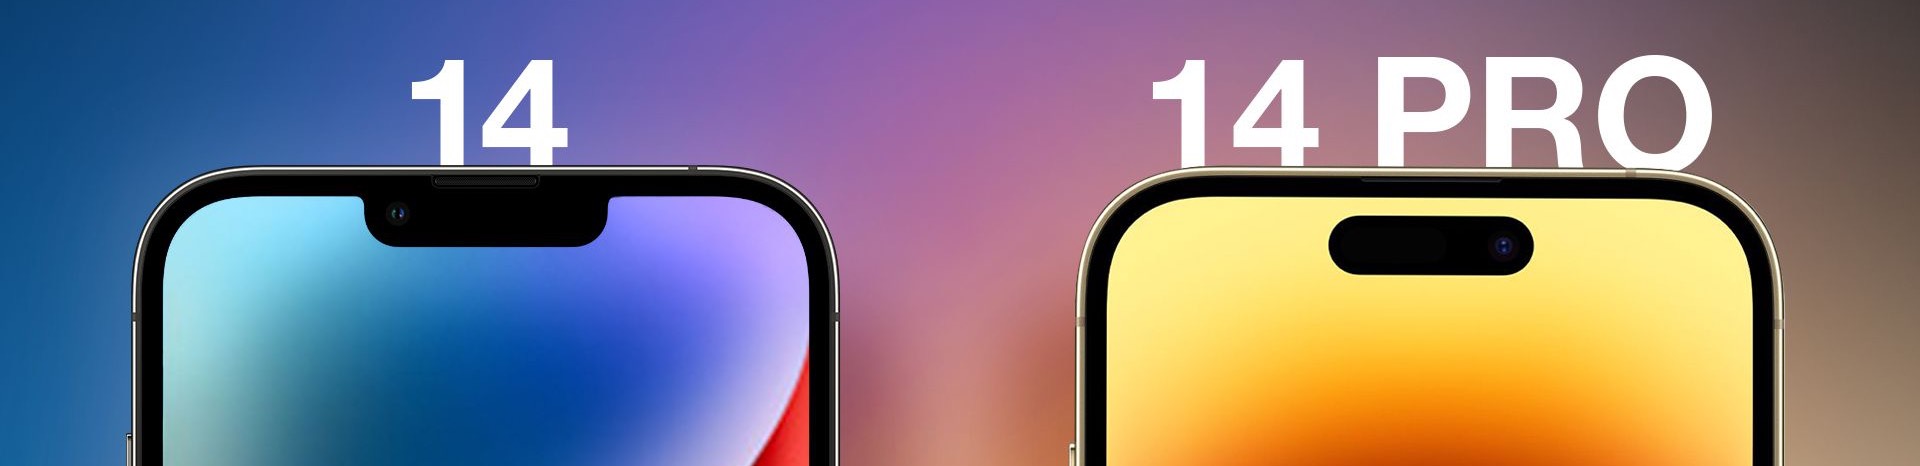 iPhone 14 Pro vs iPhone 14